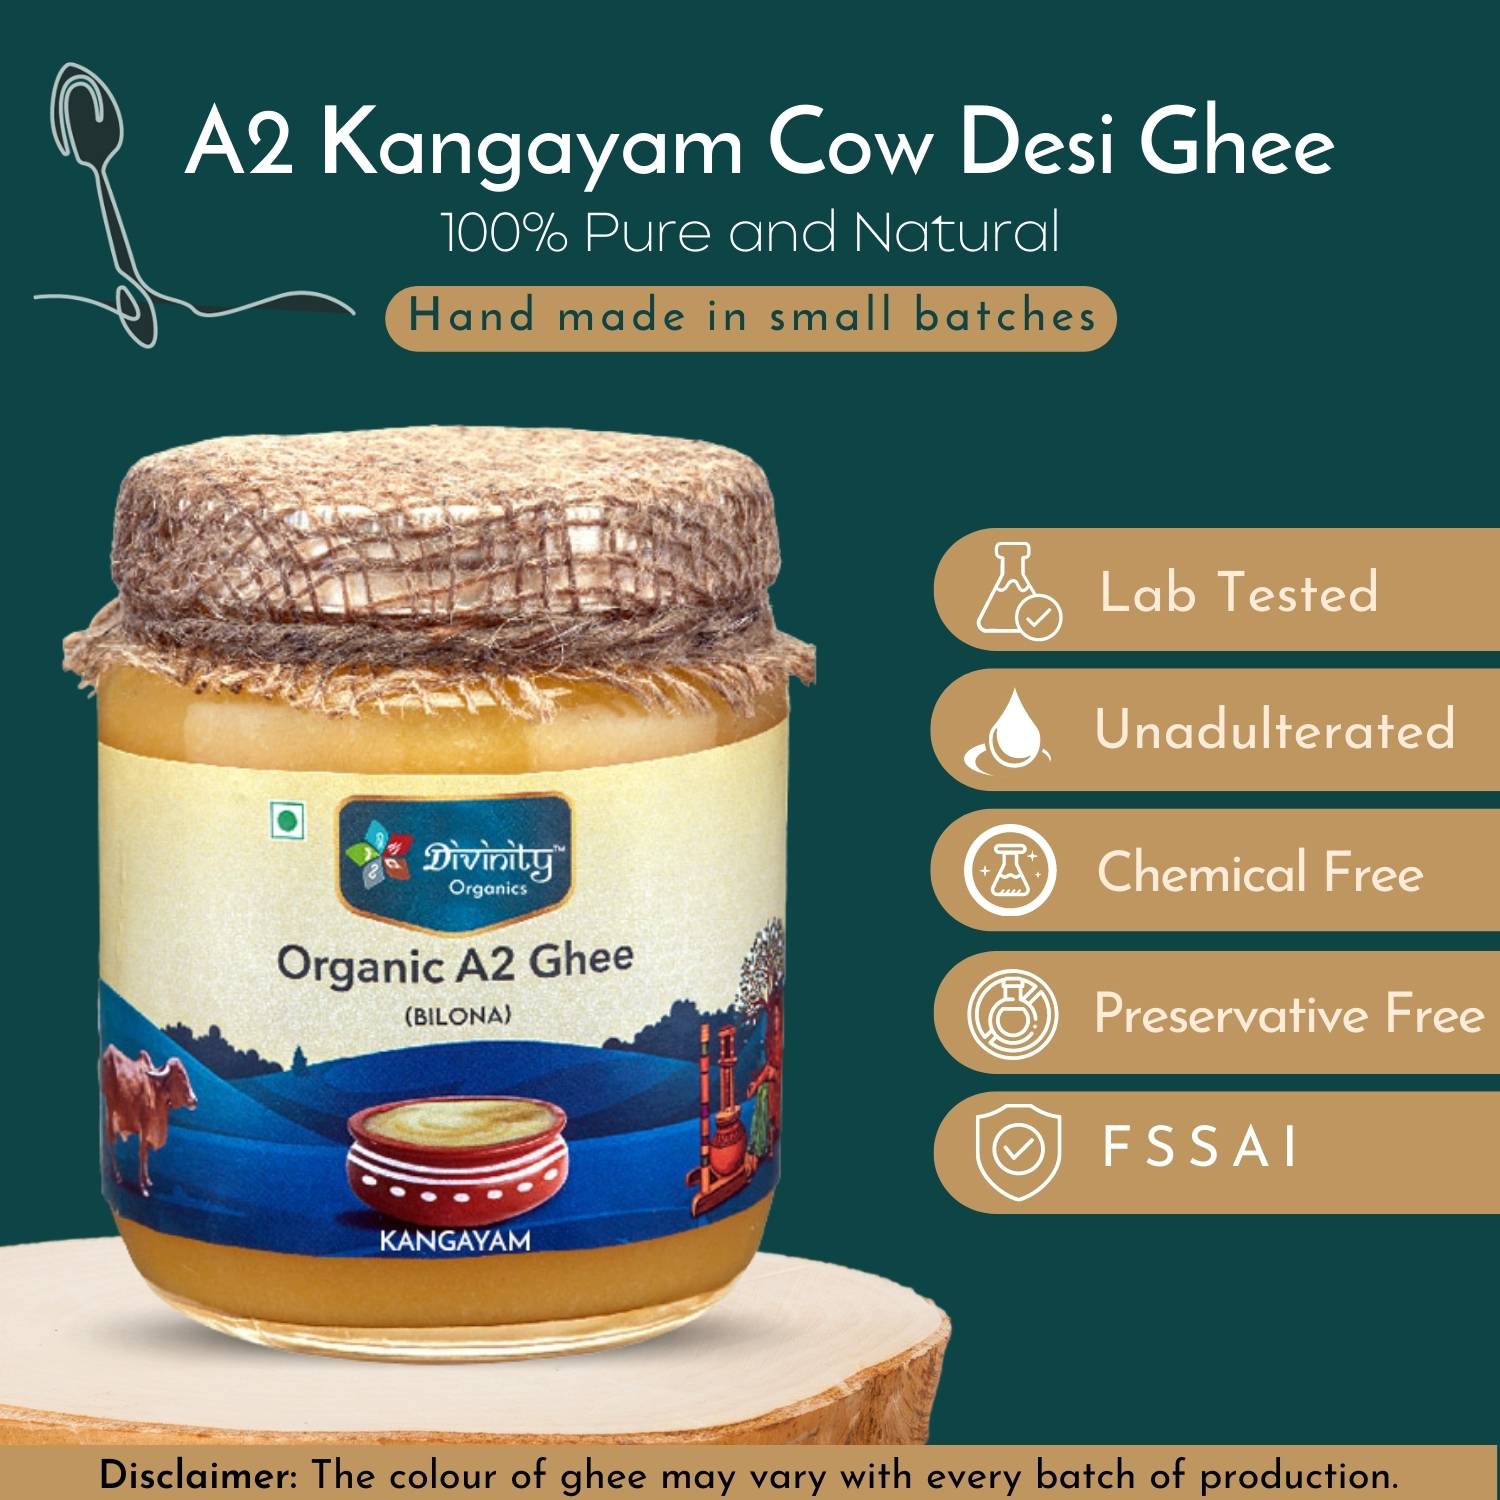 Divinity Organics A2 Cow Ghee Kangayam Quality- 100% pure and natural